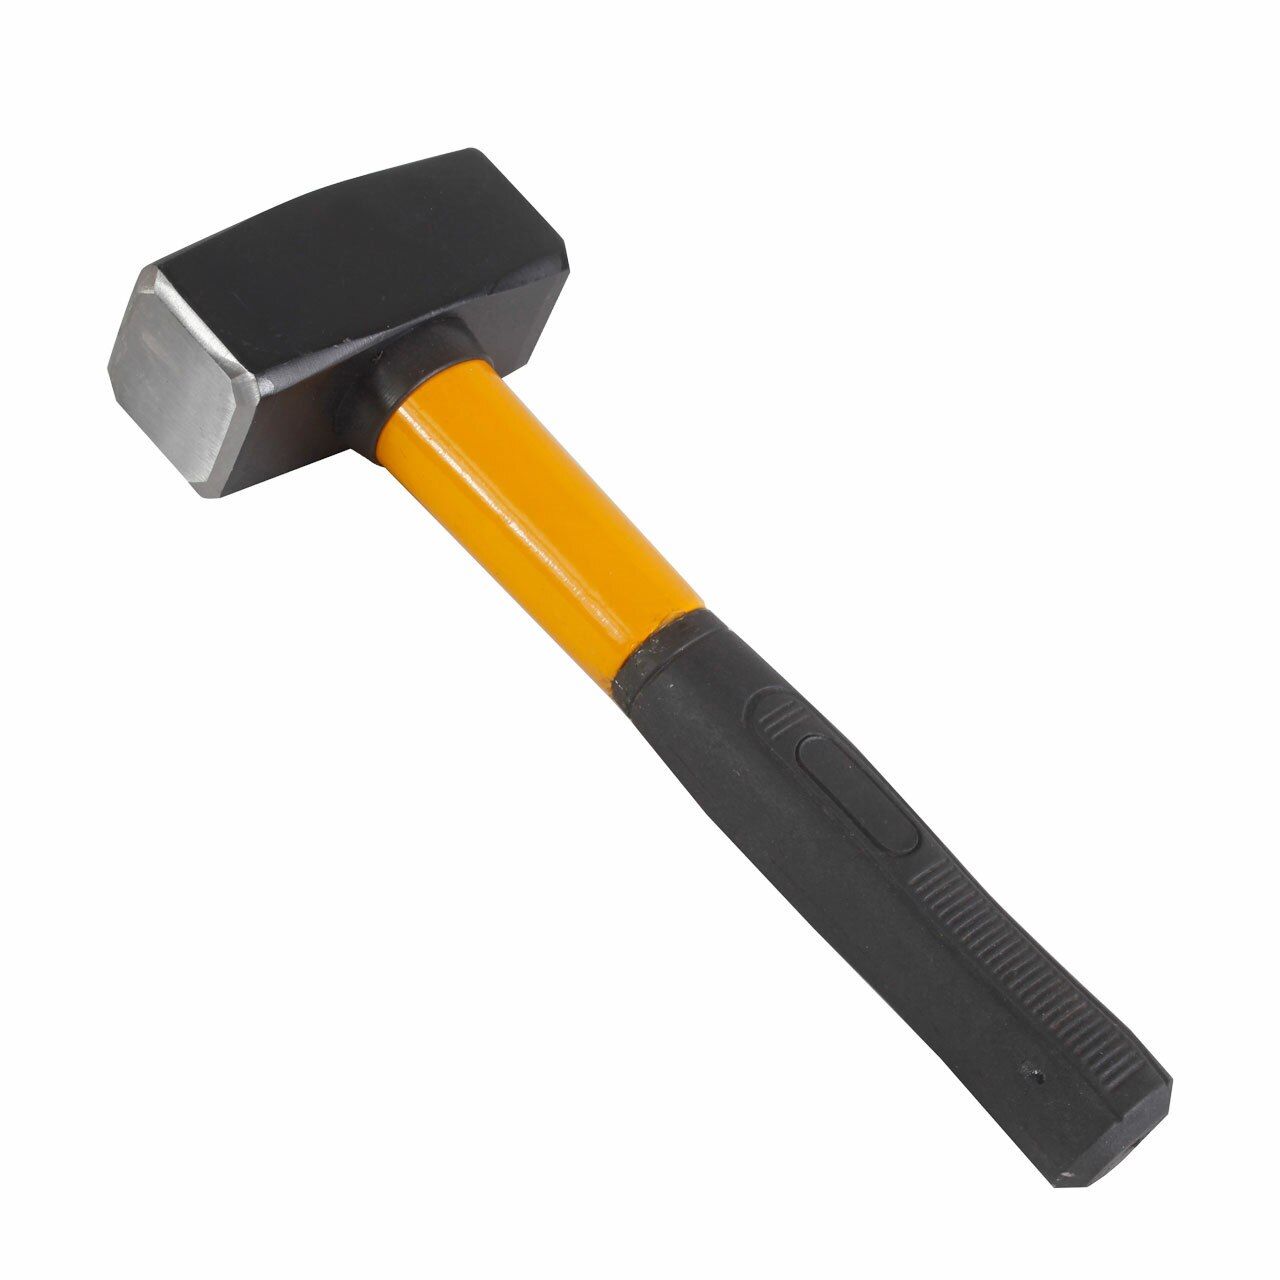 Kampa Thor Club Hammer 1kg Steel Shaft